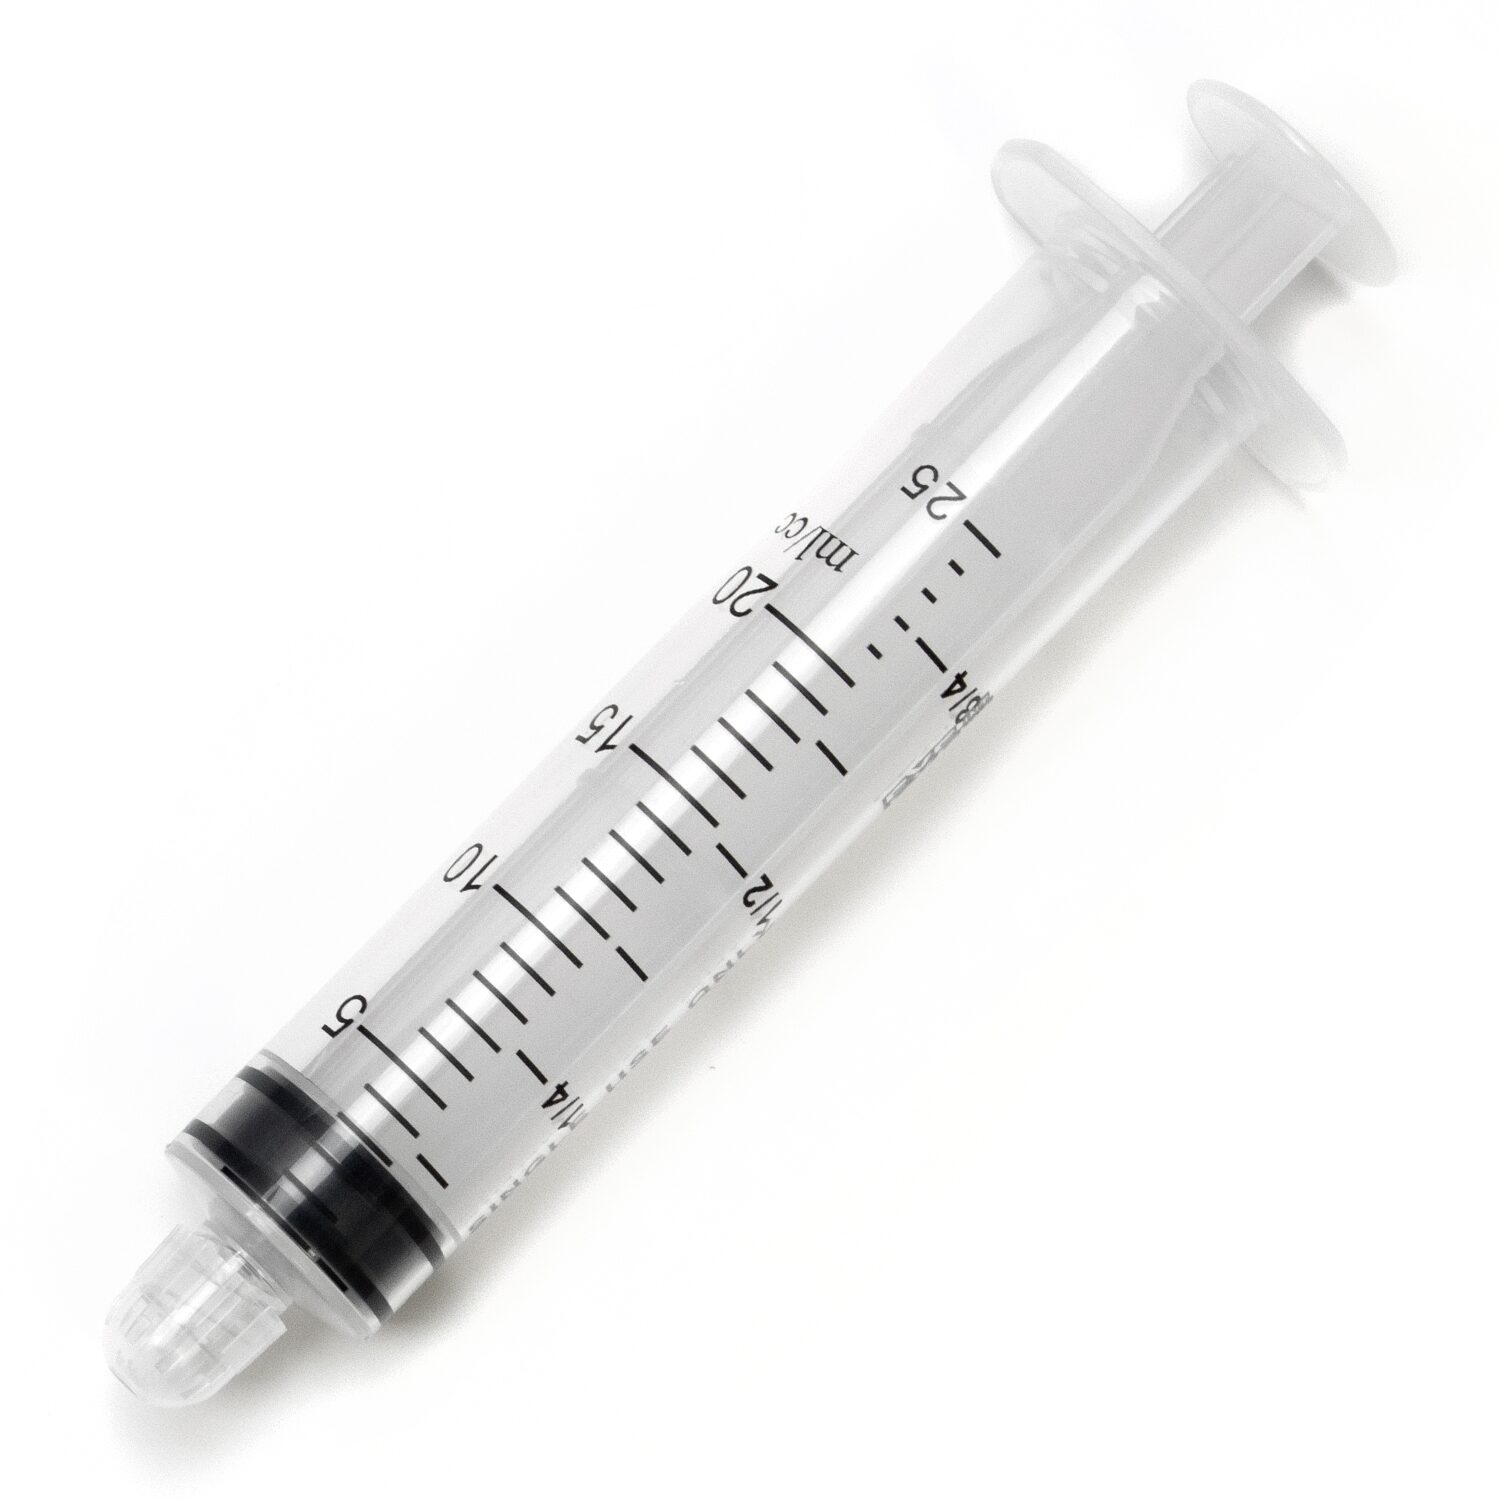 Exel International 10 to 12cc Syringes with Needle, Luer Lock Tip